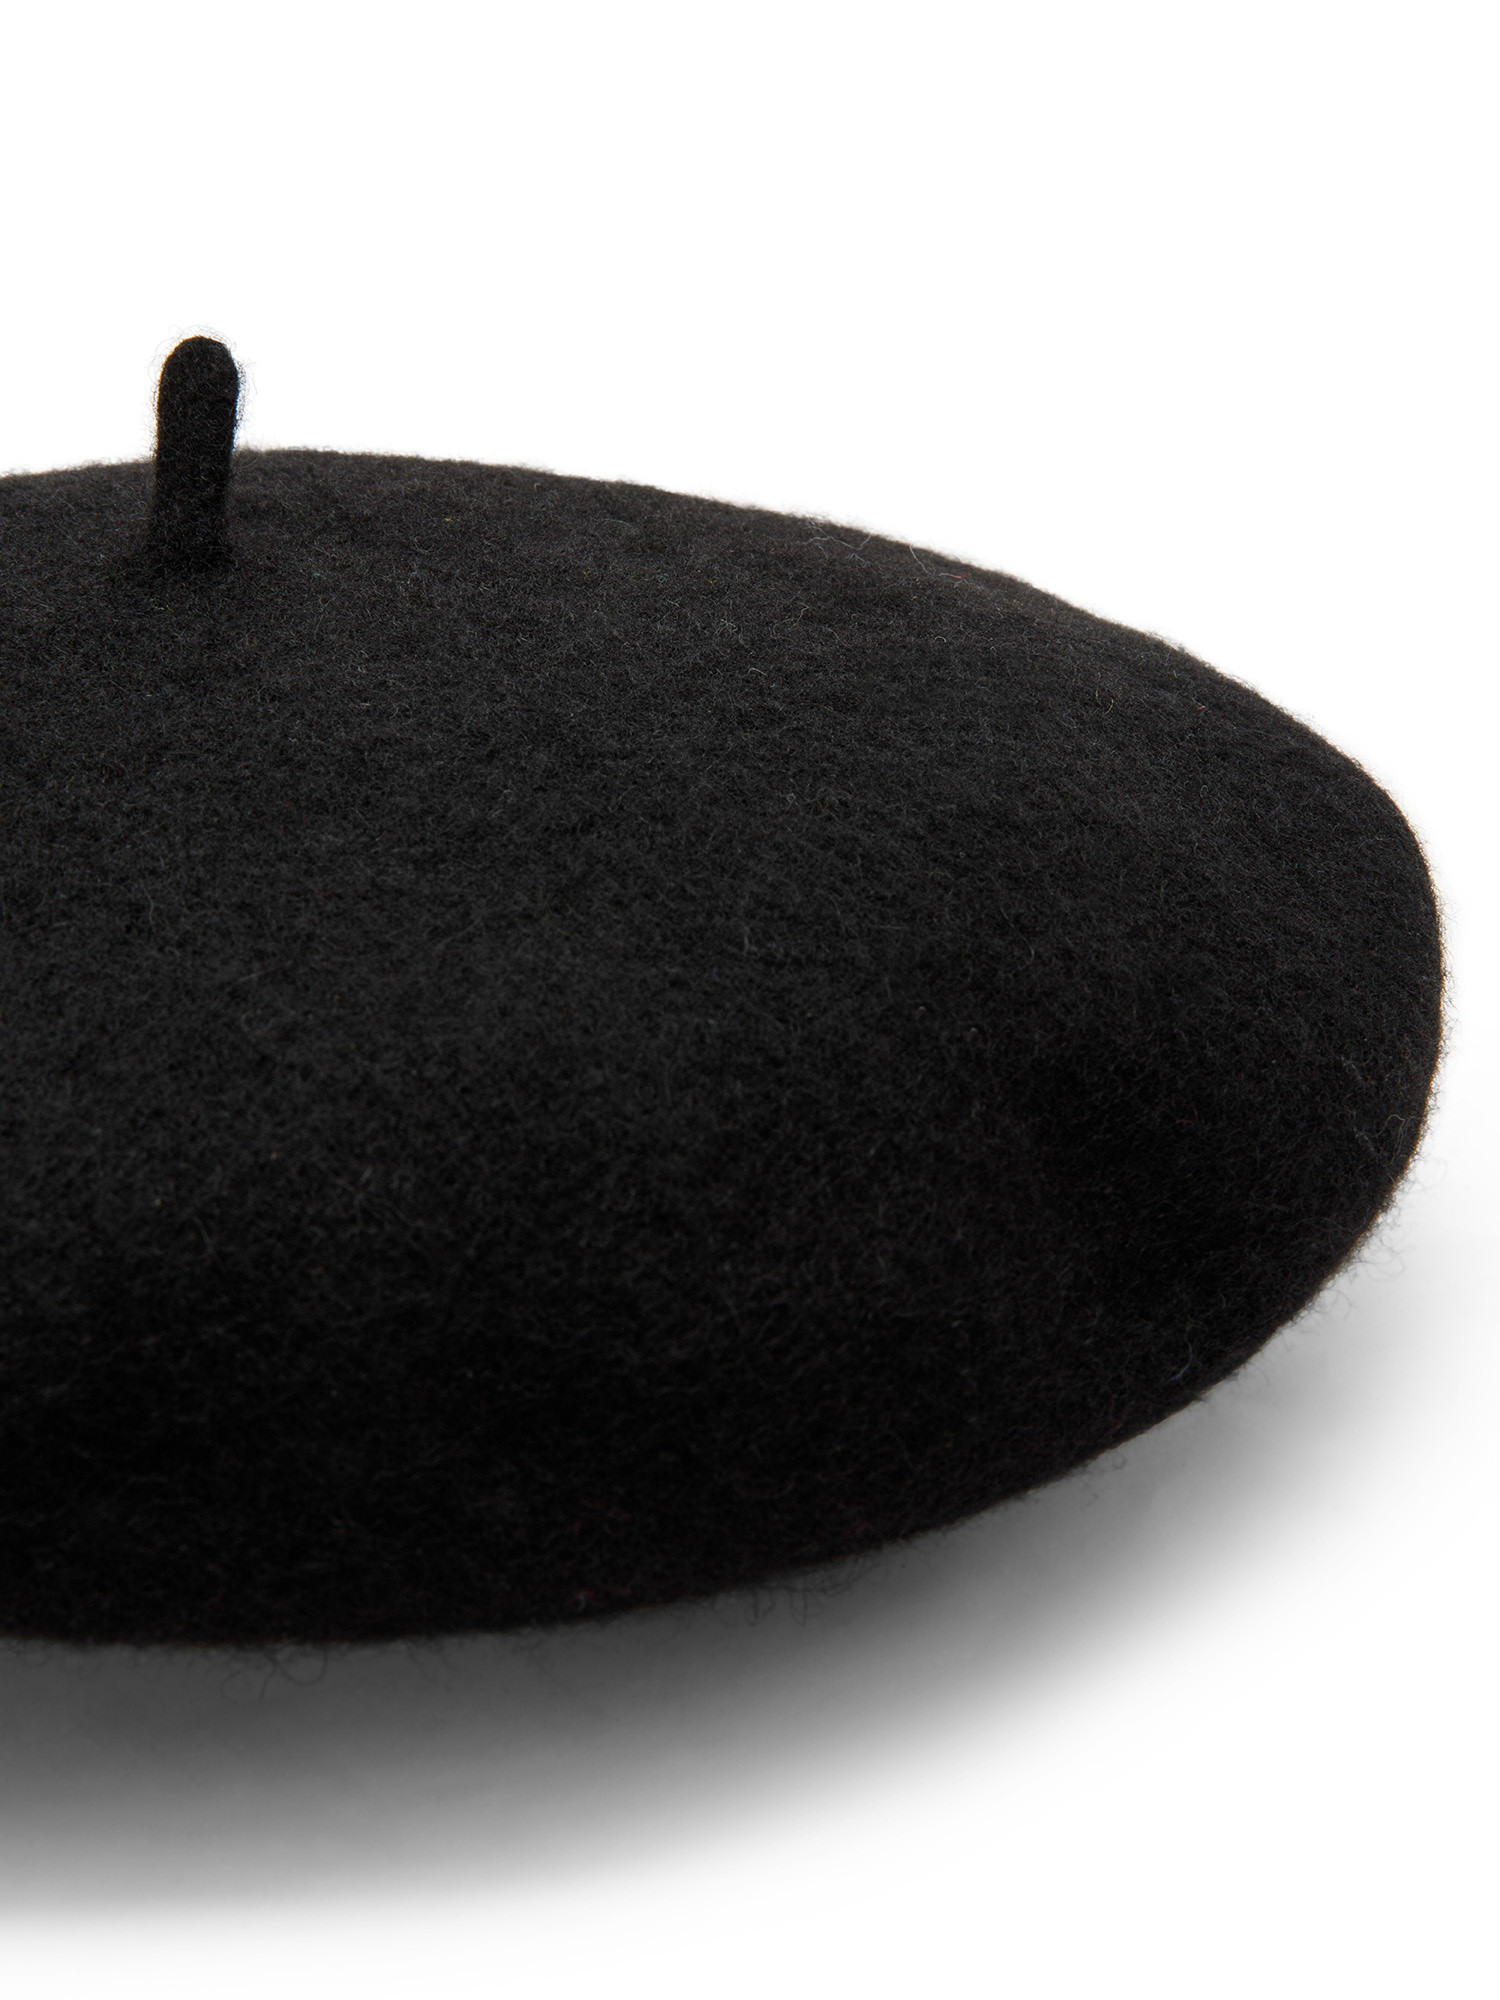 Koan - Pure wool beret, Black, large image number 1